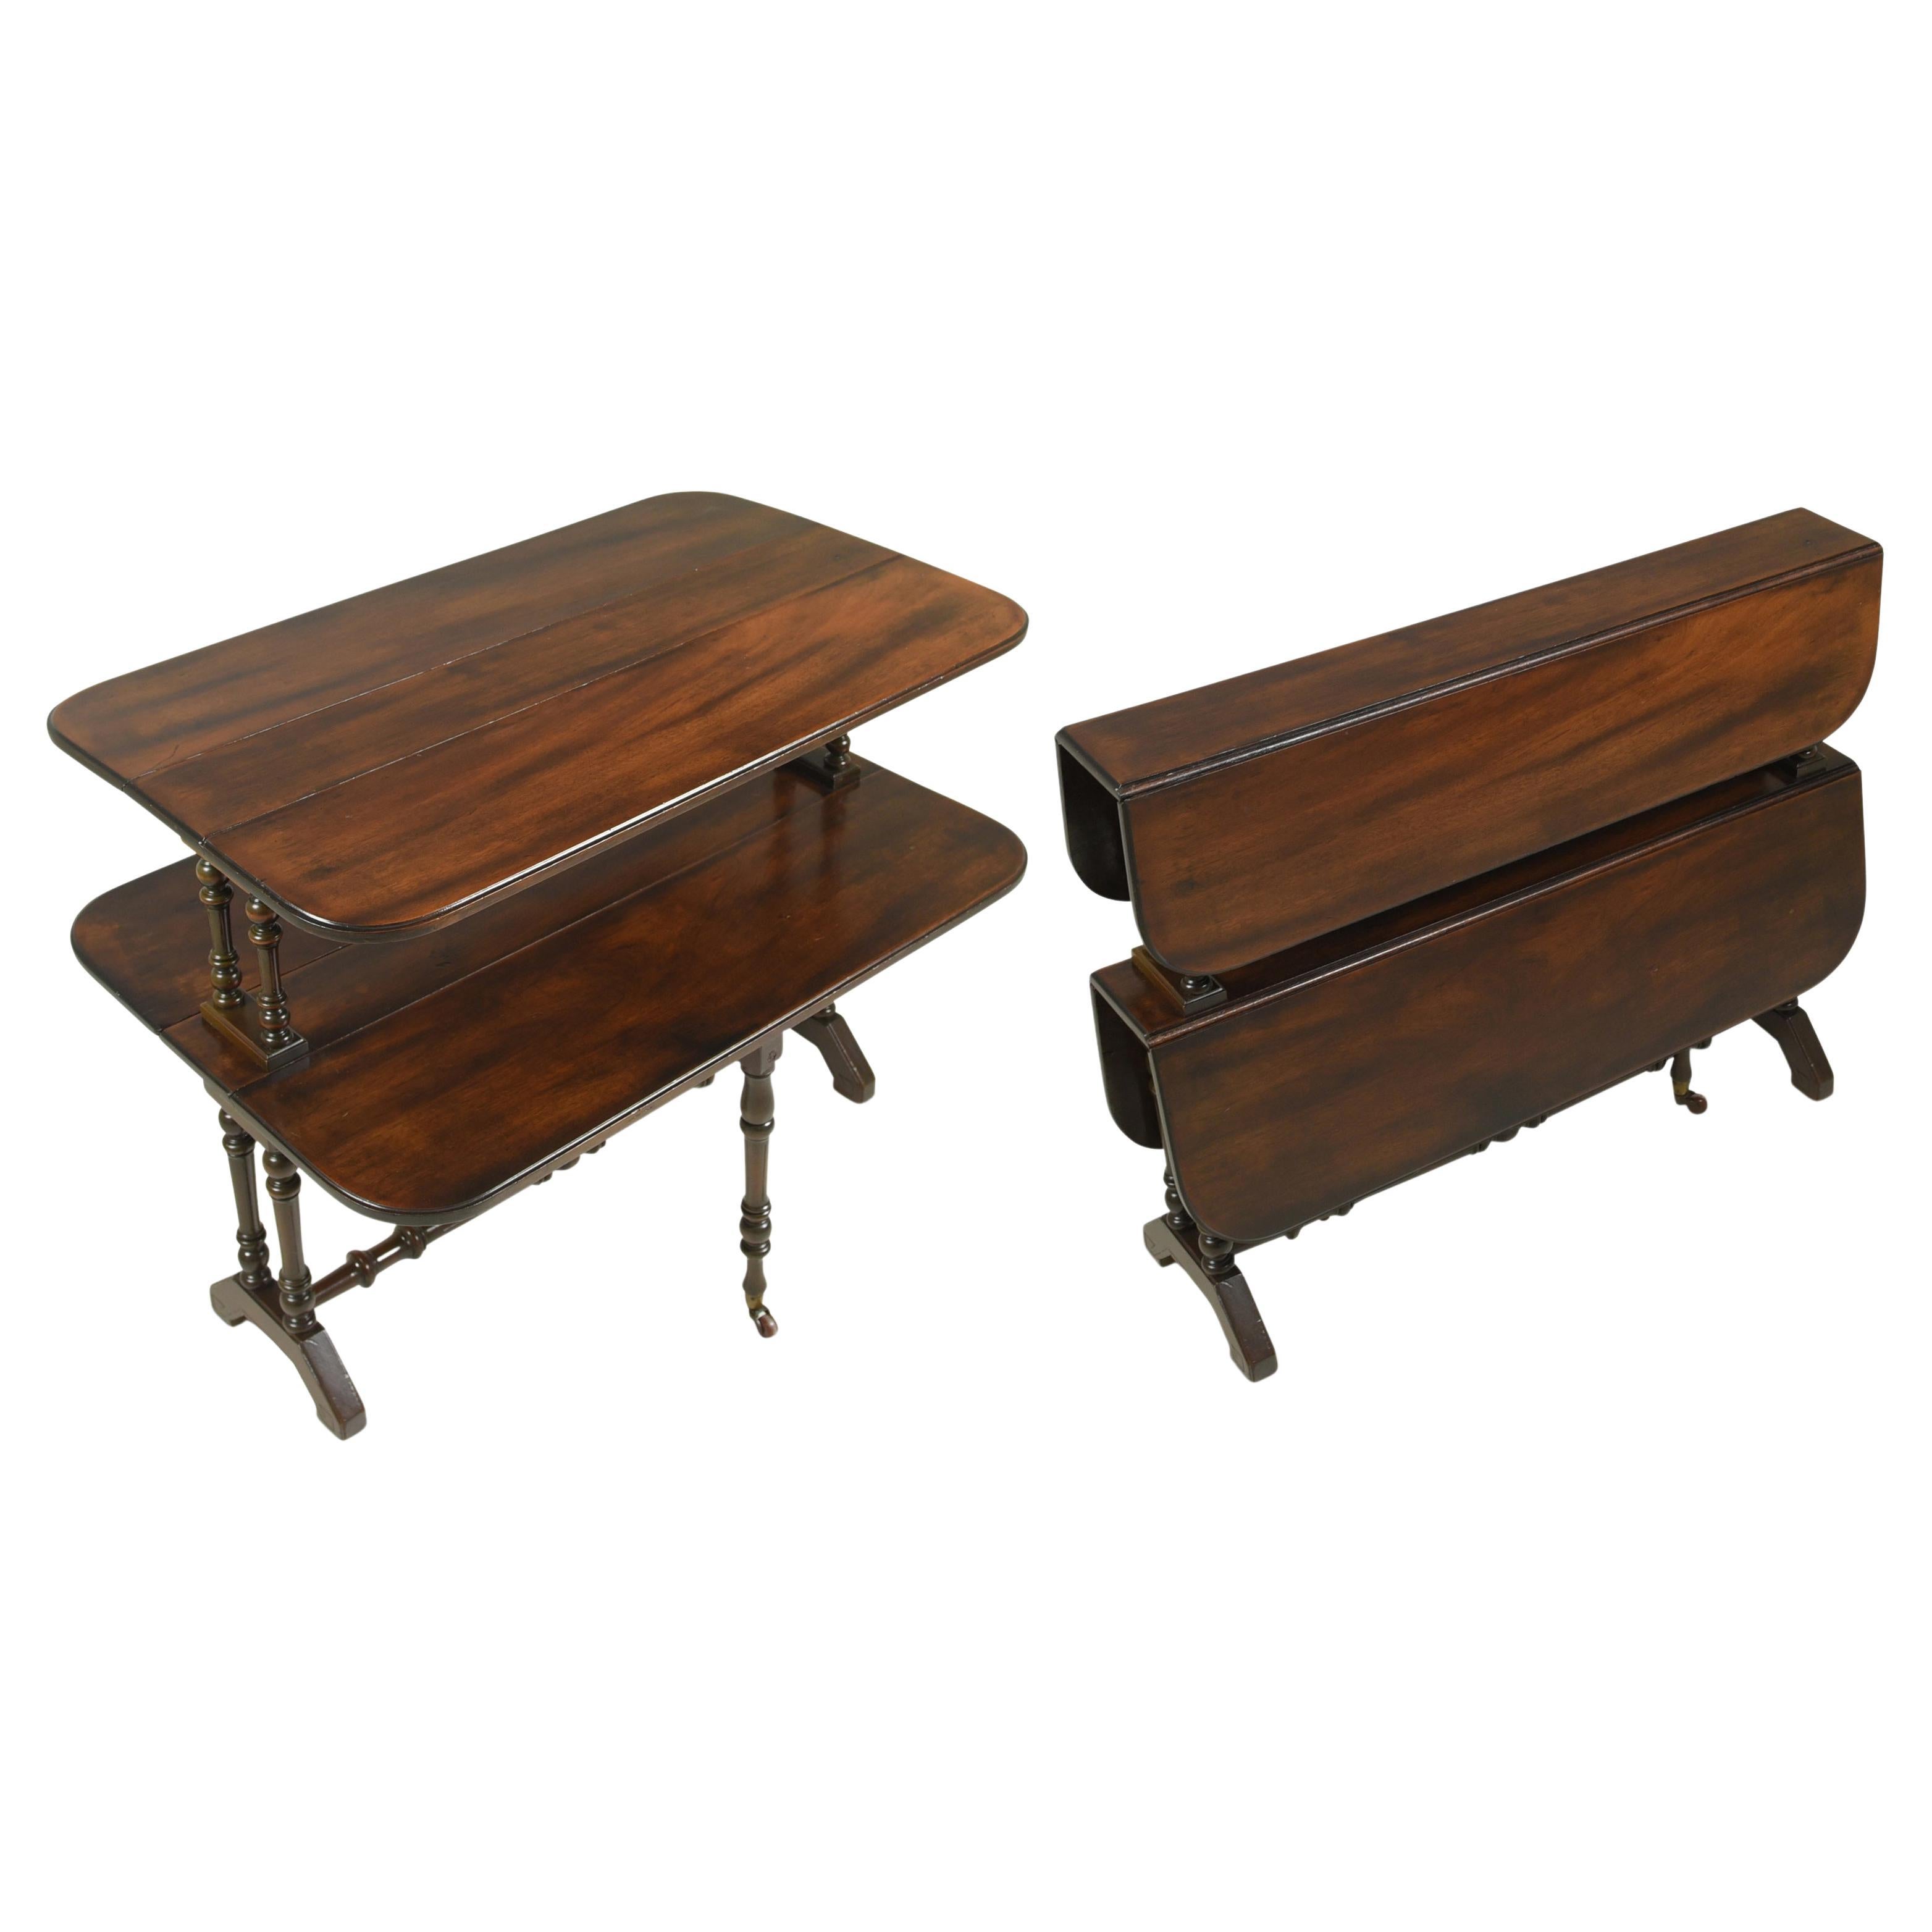 Two Tier Gateleg Folding Table / Shelving Table in Mahogany England, 1880